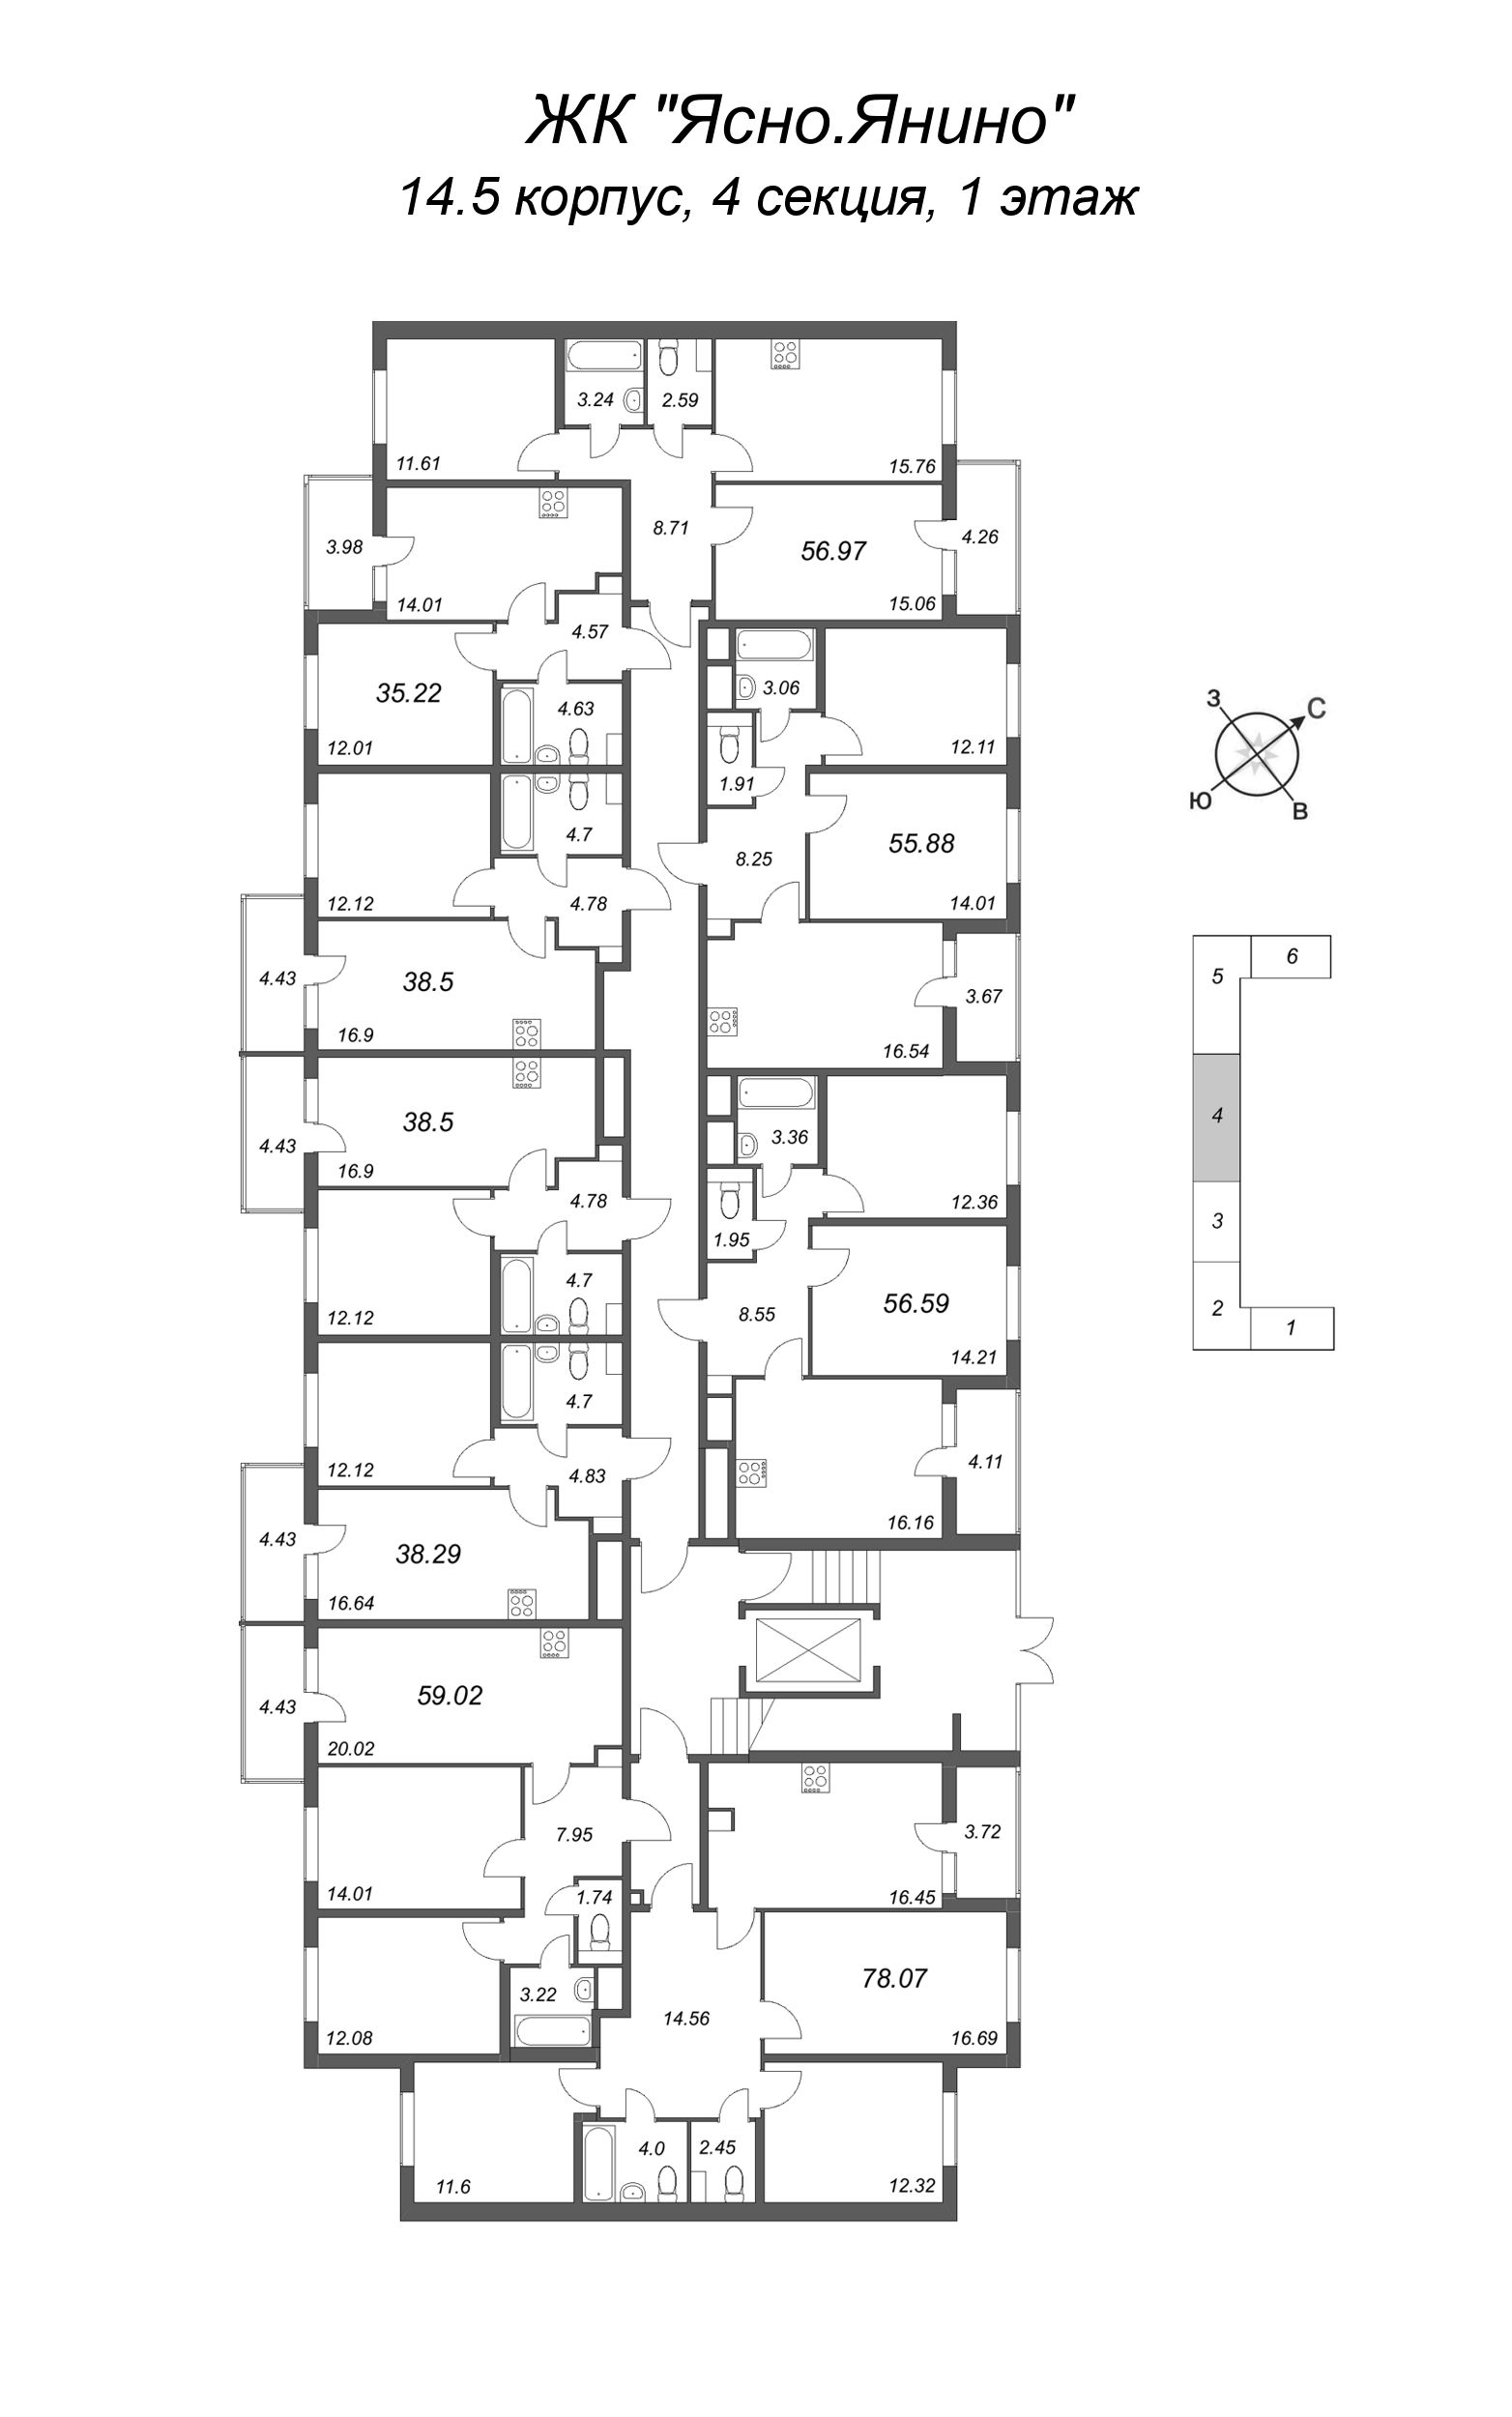 4-комнатная (Евро) квартира, 78.07 м² - планировка этажа